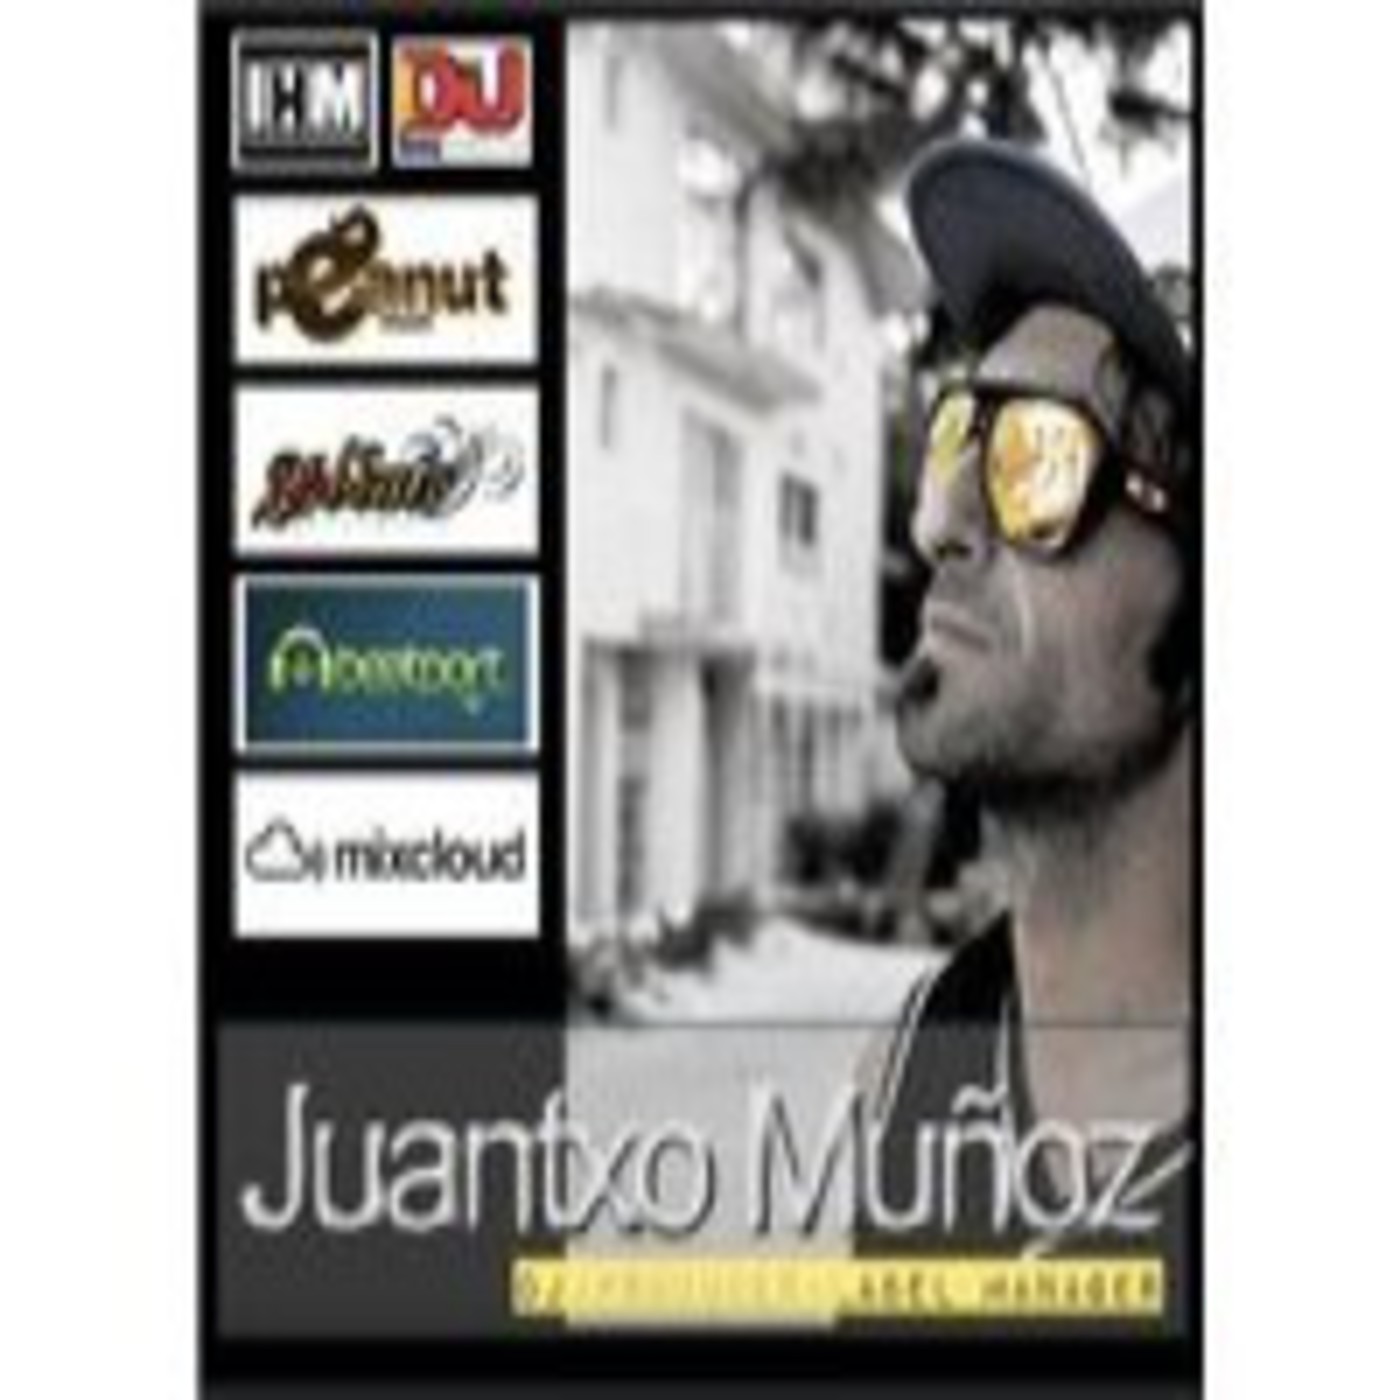 Podcast Juantxo Muñoz